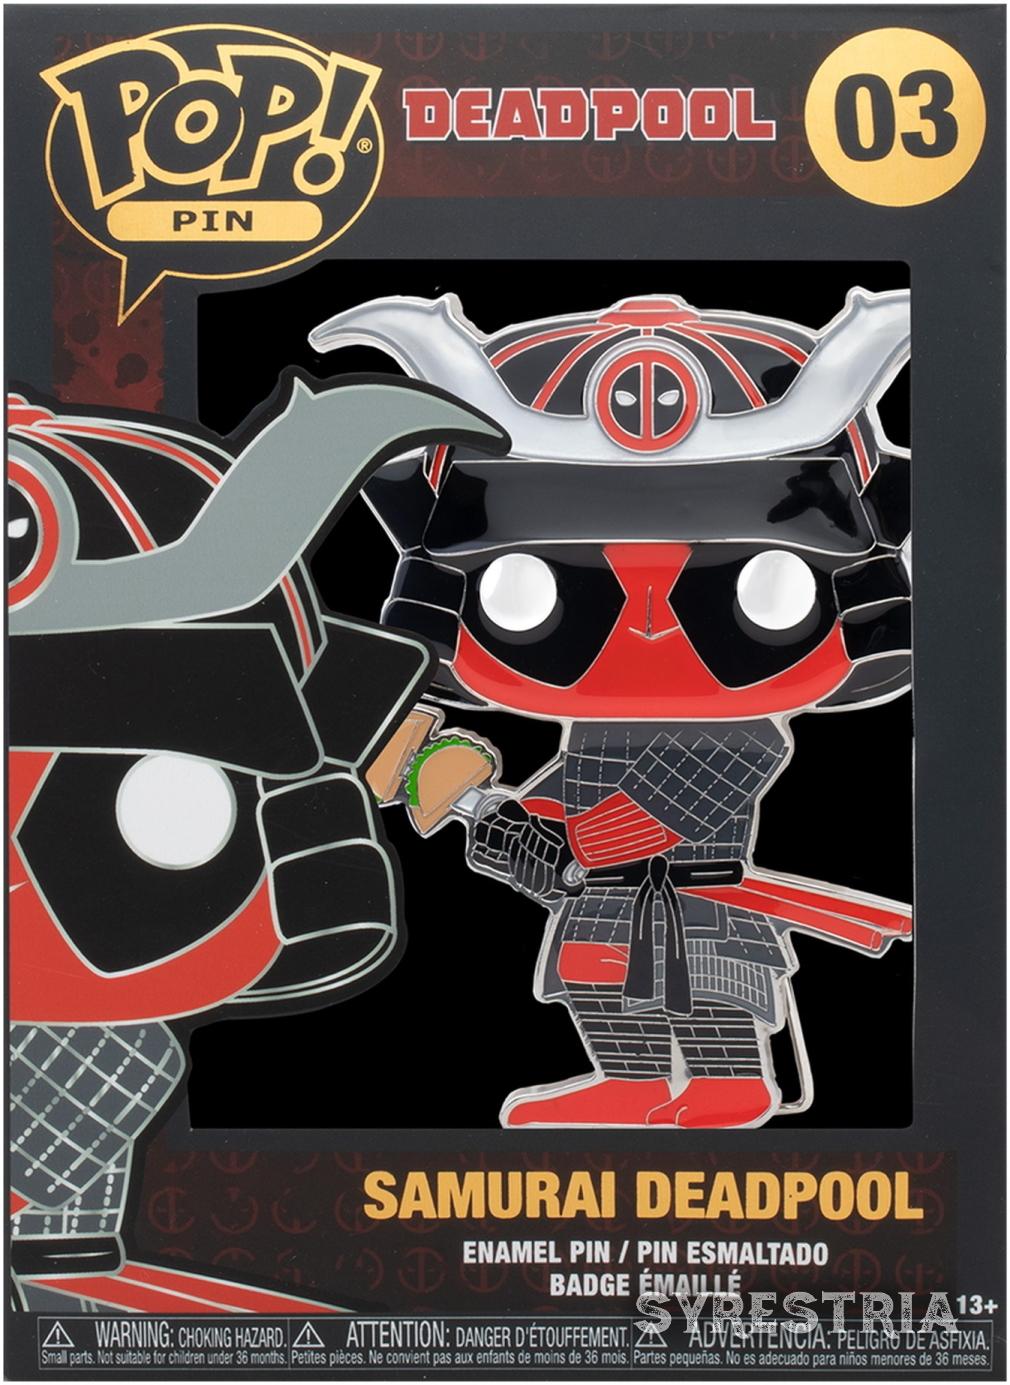 Deadpool - Samurai Deadpool 03 - Funko Pin